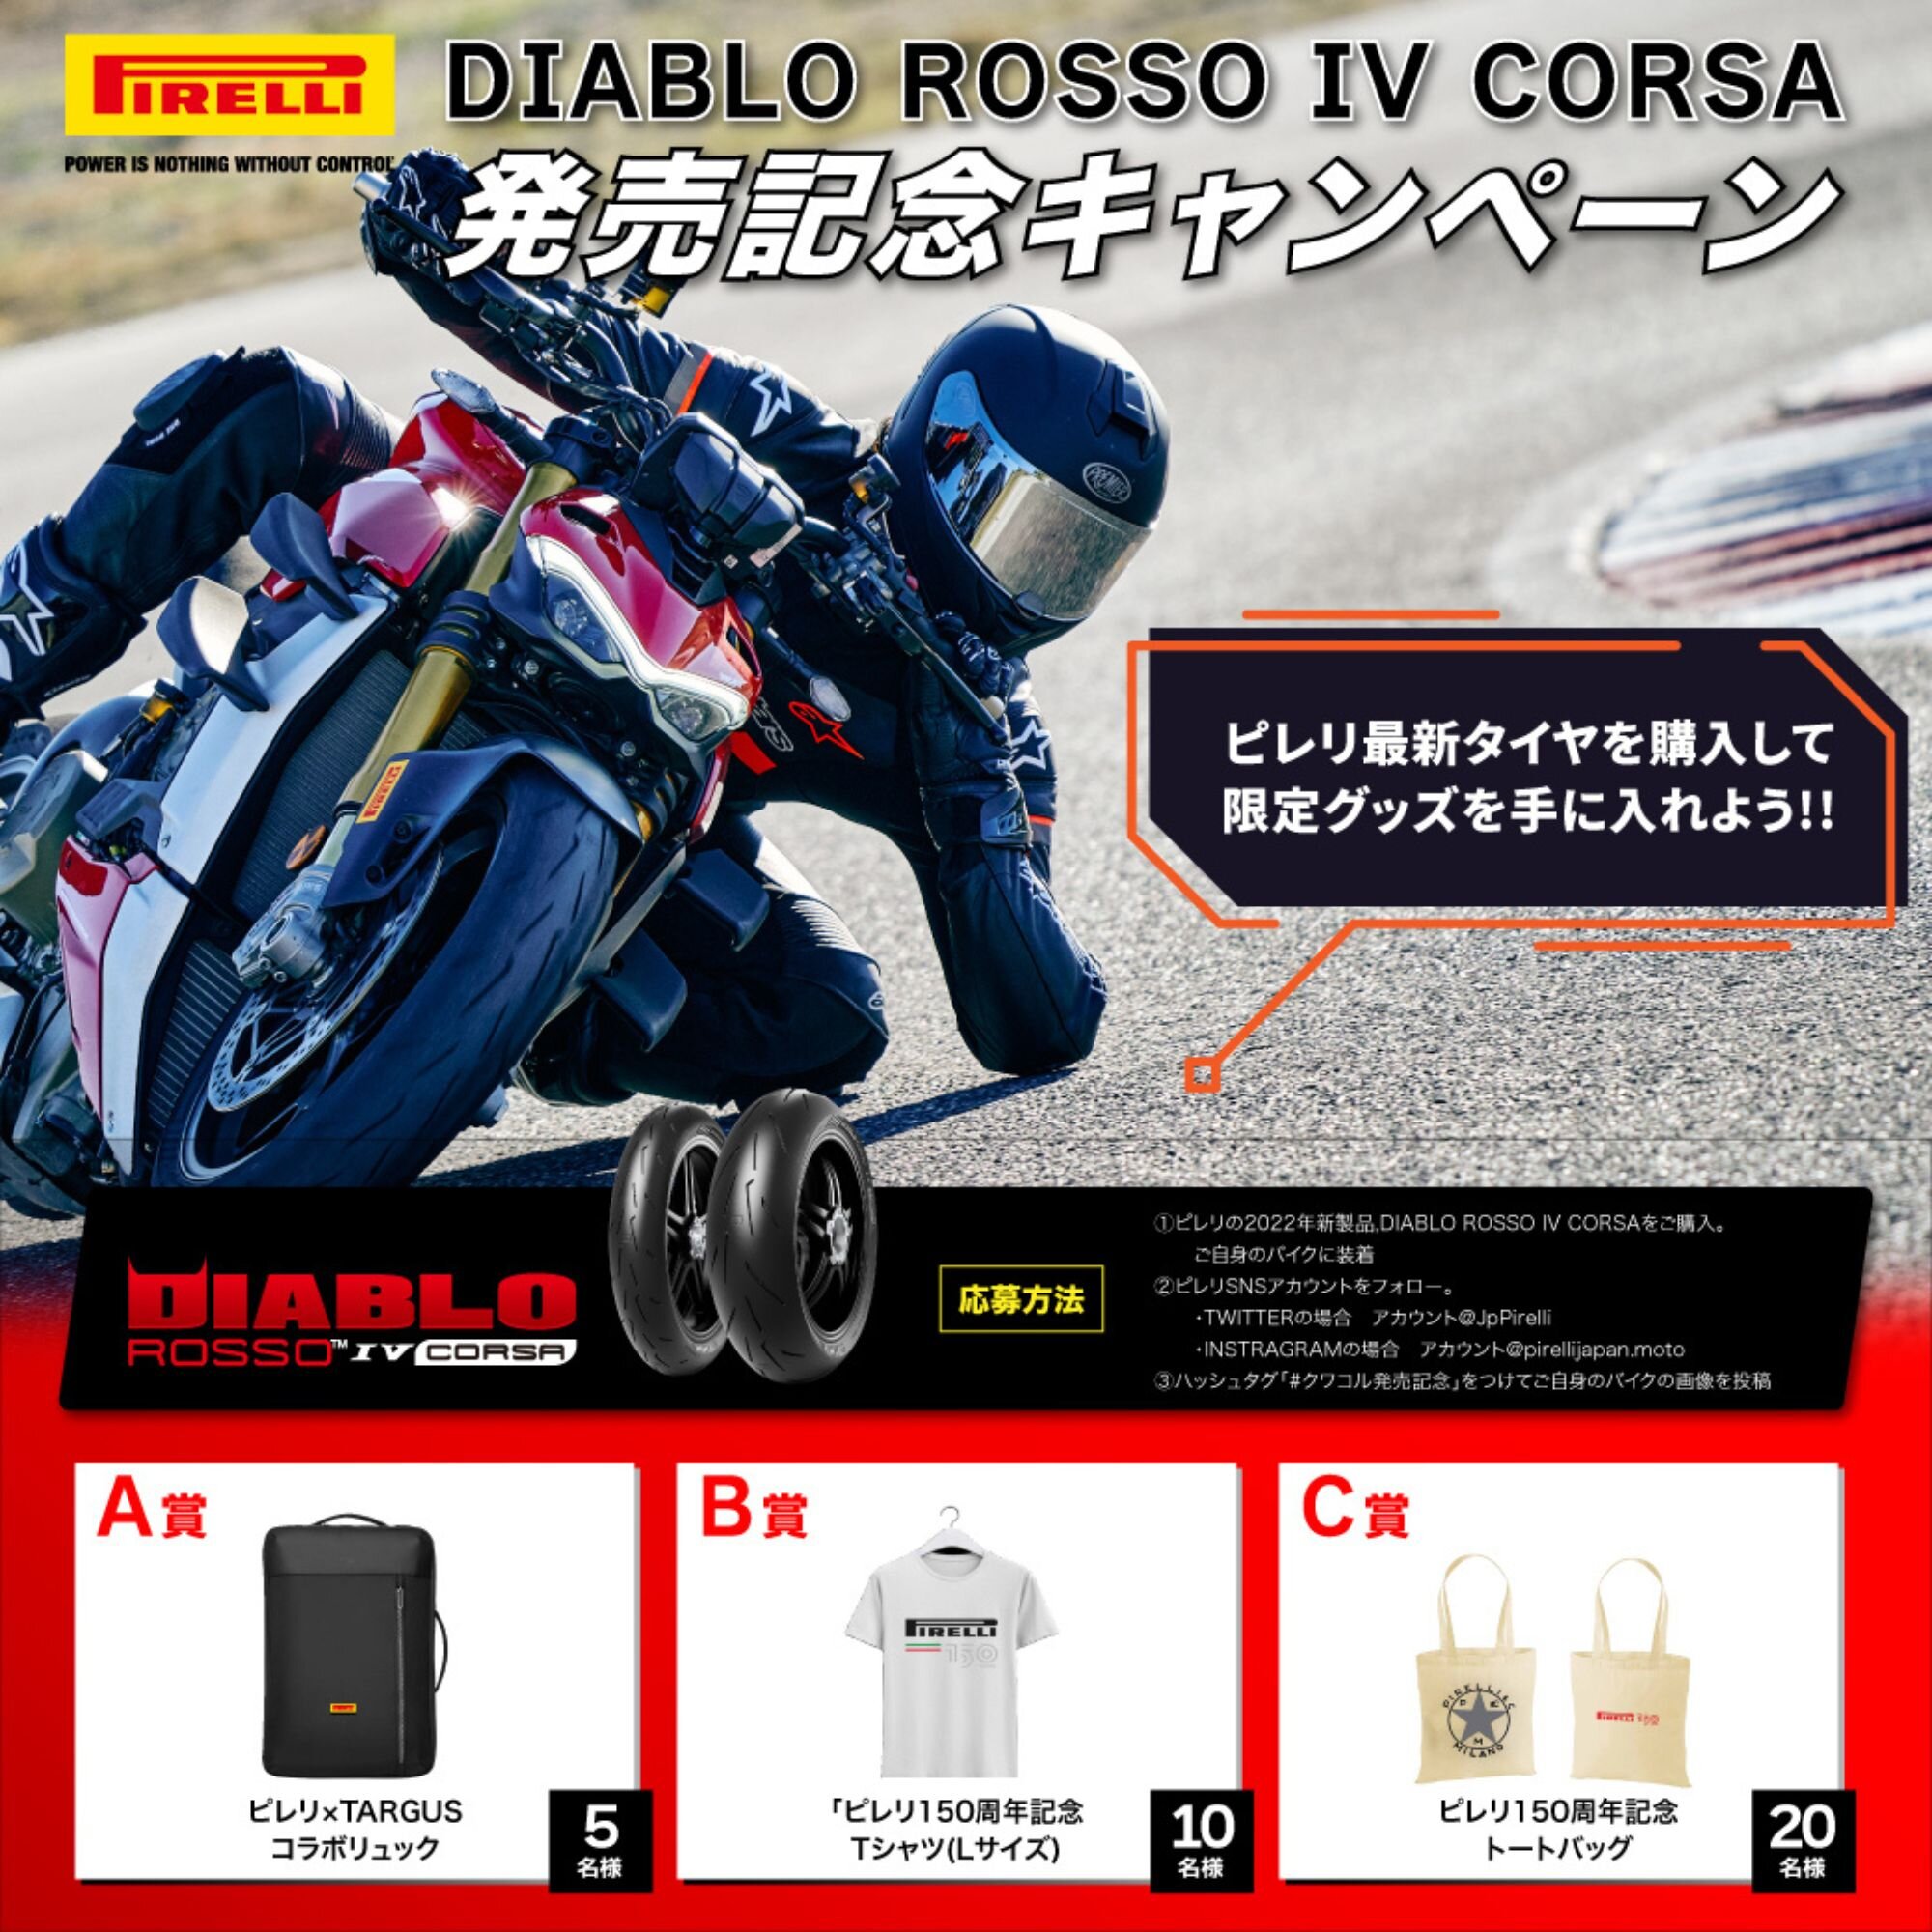 DIABLO ROSSO IV CORSA発売記念キャンペーン